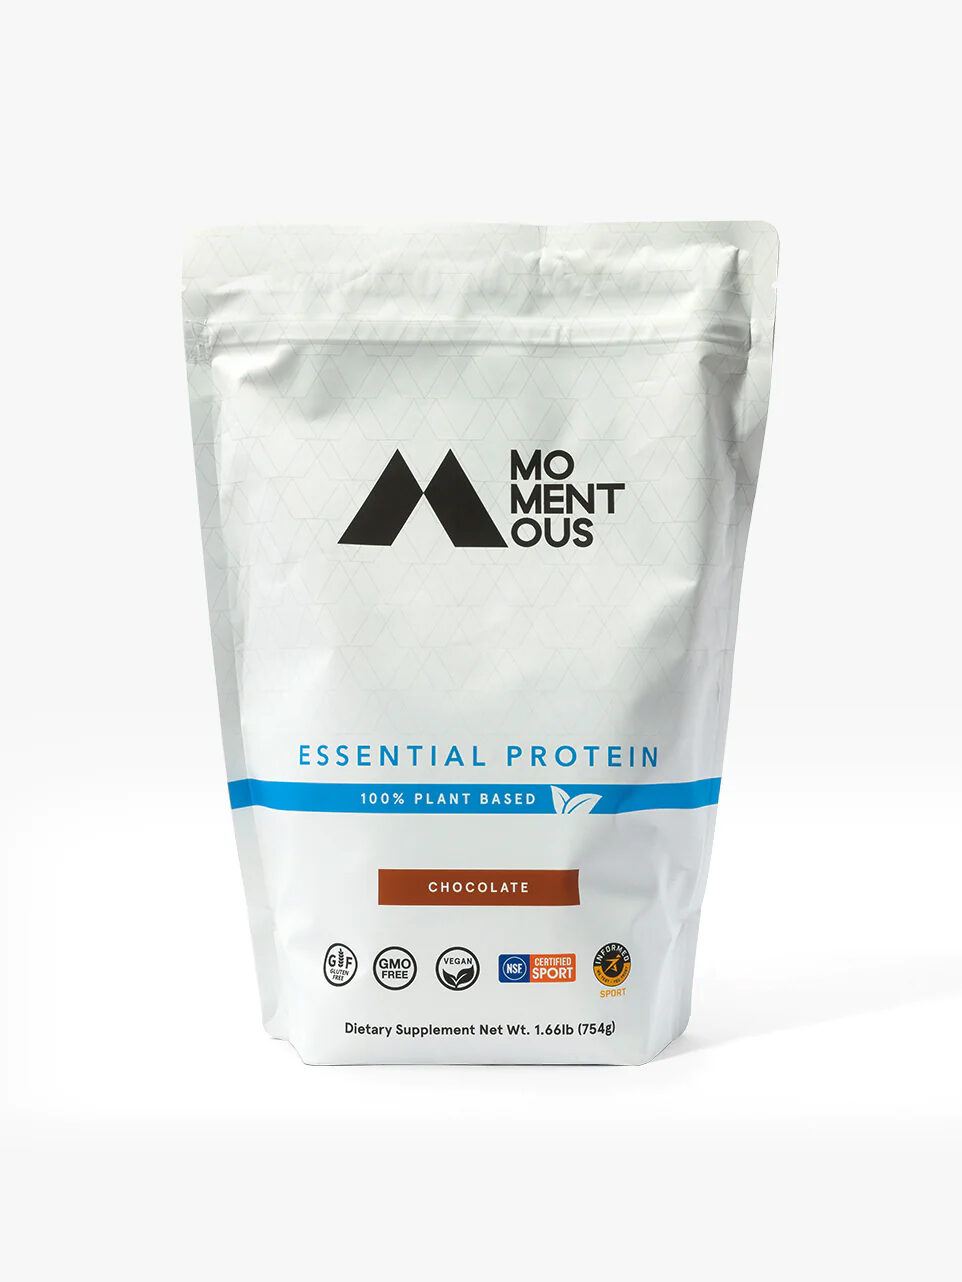 A bag of chocolate Momentous protein powder.